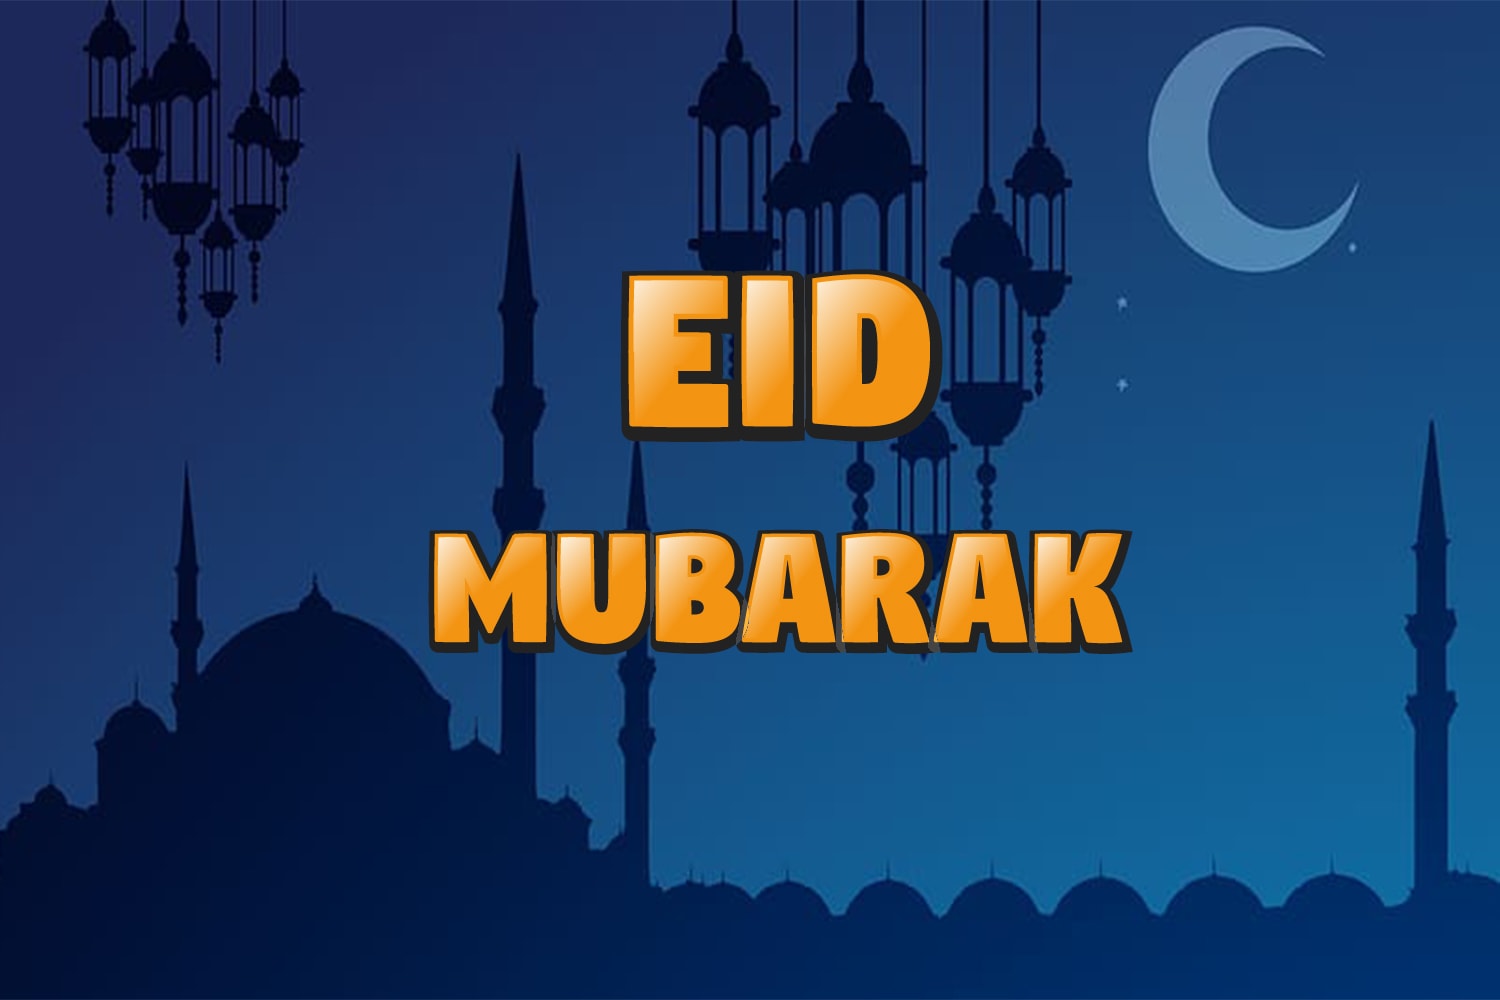 Best Eid Mubrak Images free download - Eid Ul Fitr 2020